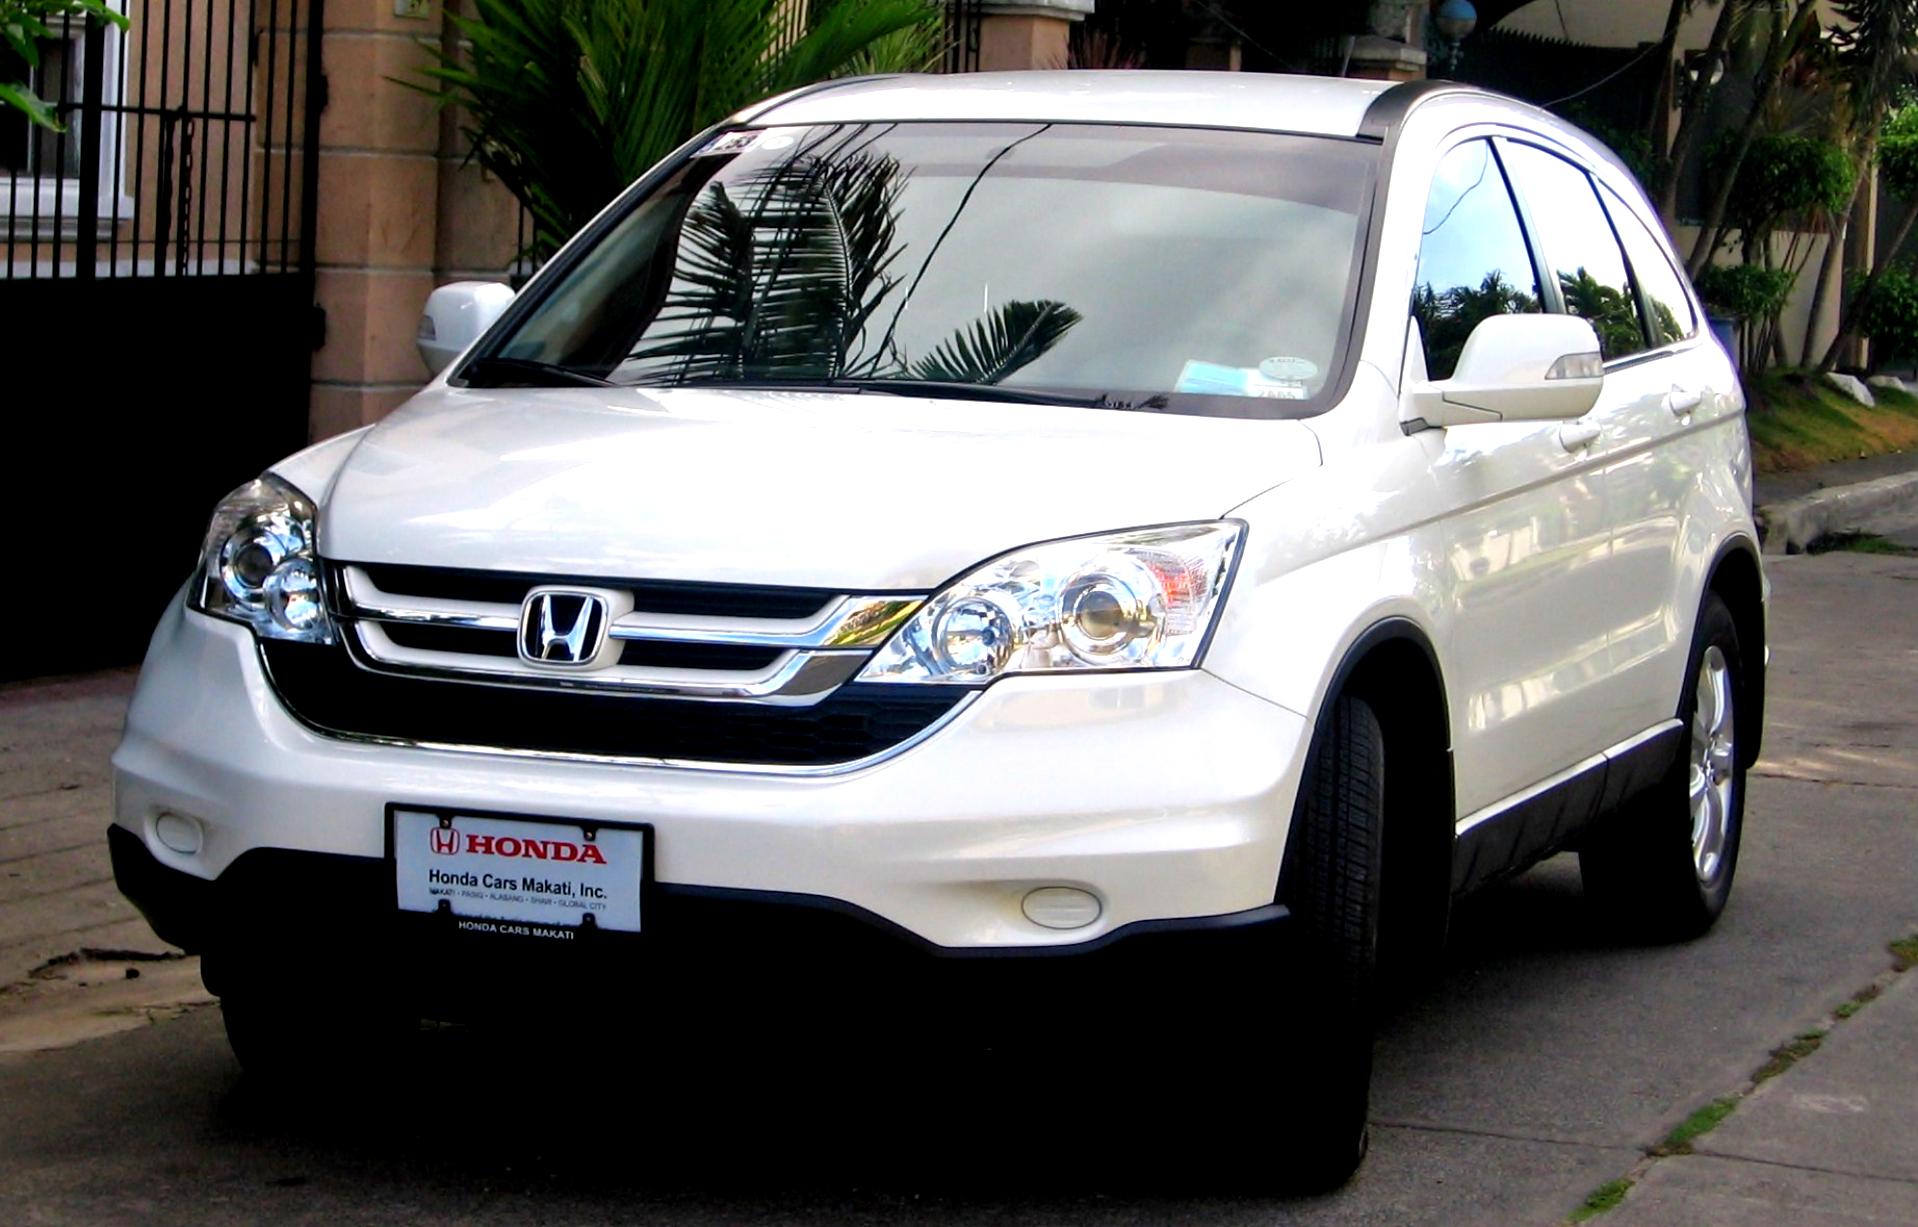 Купить хонда срв иркутск. Honda CRV 2010 белая. Honda CR-V 2010 белая. Хонда СРВ 2010. Хонда СРВ 2010 белый.